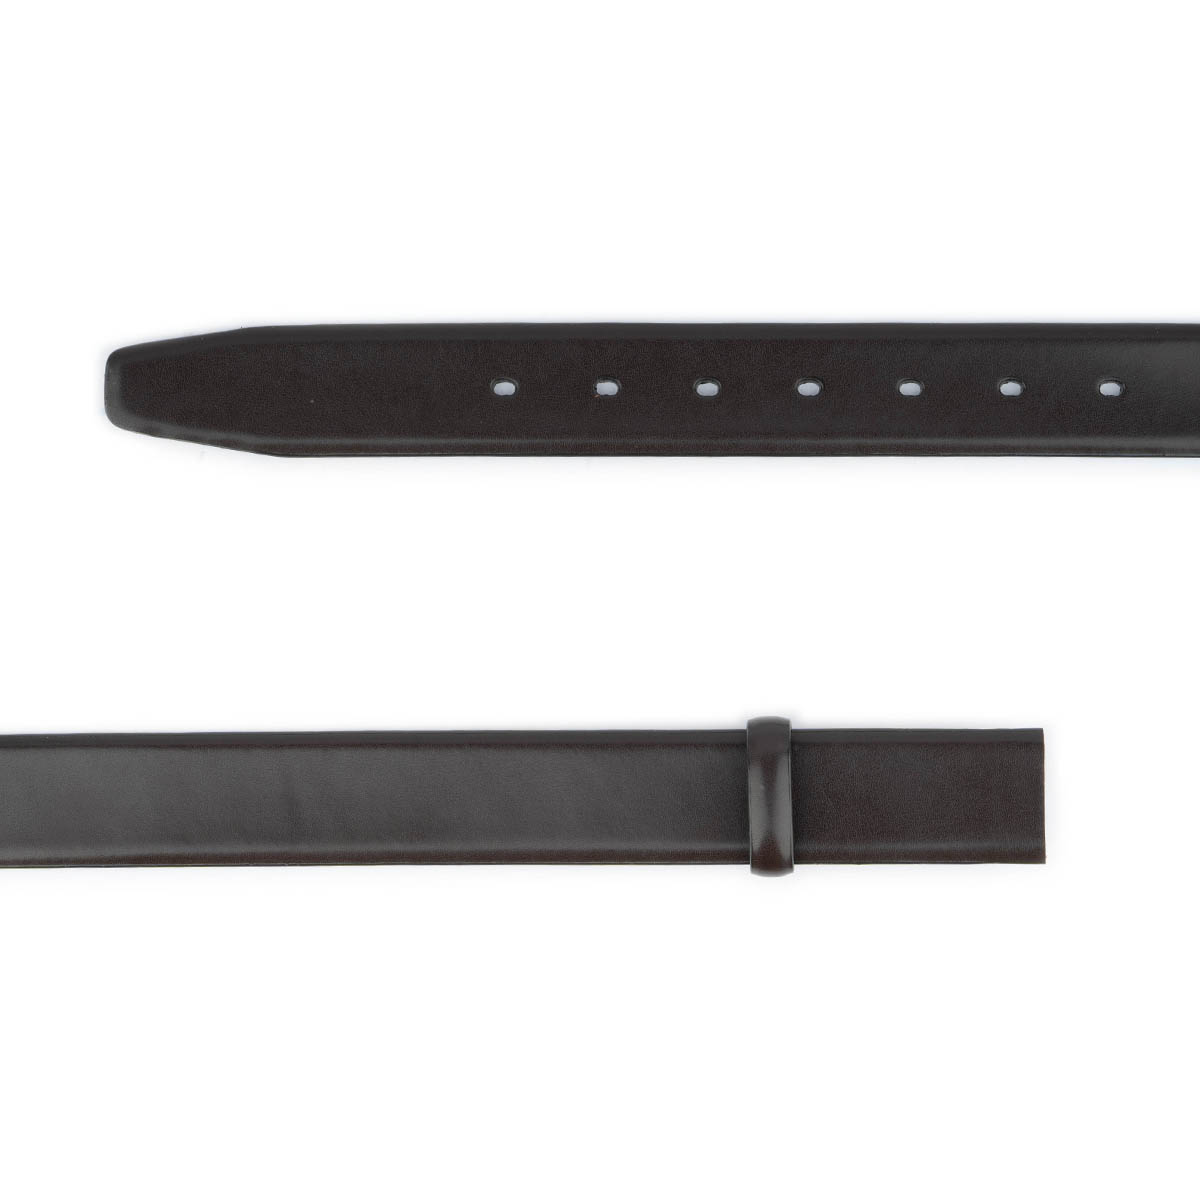 Buy Dark Brown Belt Strap Replacement Feather Edge - LeatherBeltsOnline.com